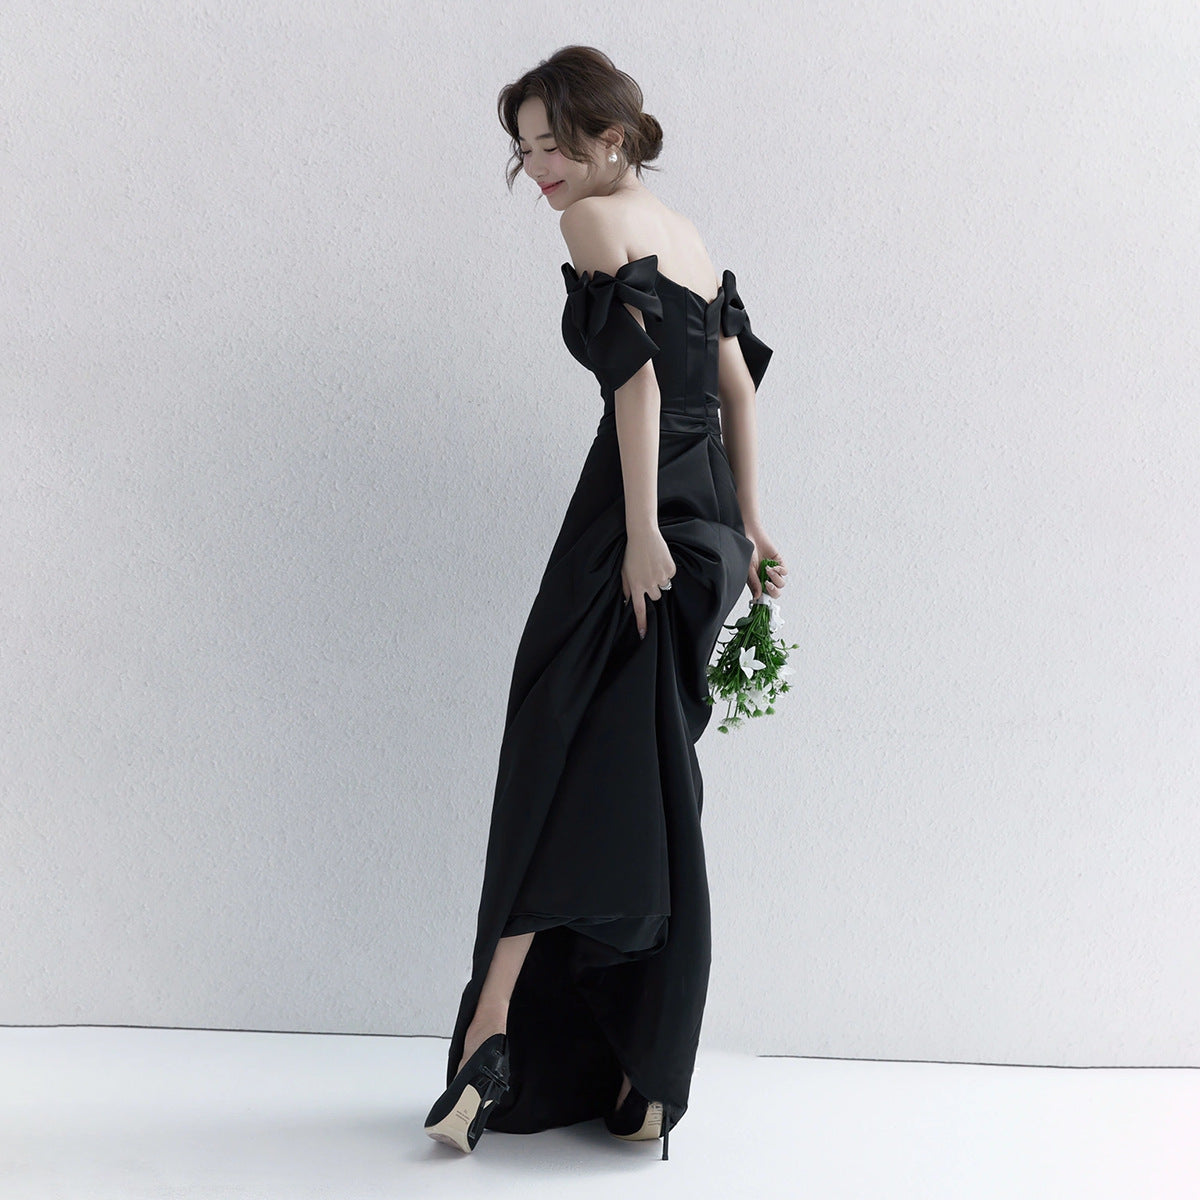 Light Wedding Dress Black Satin Hepburn Style Studio Theme Couple Taking Pictures Bow Registration Dress